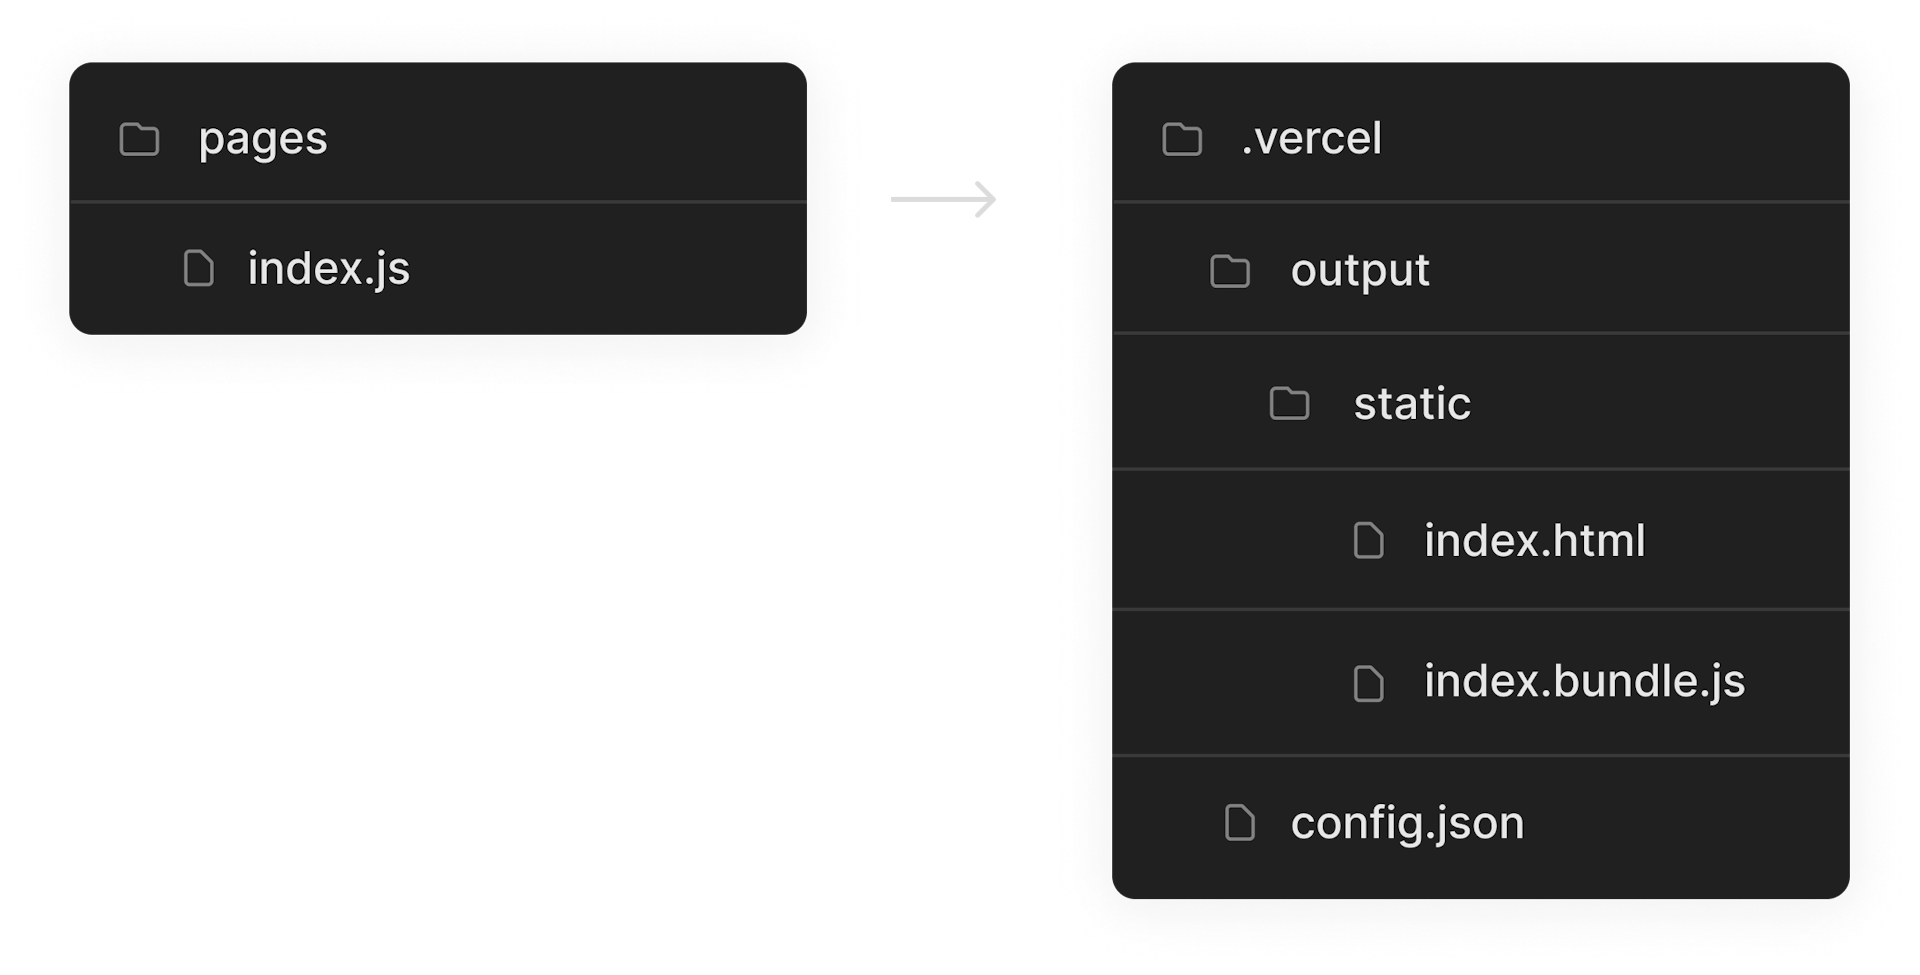 Folder structure for static assets